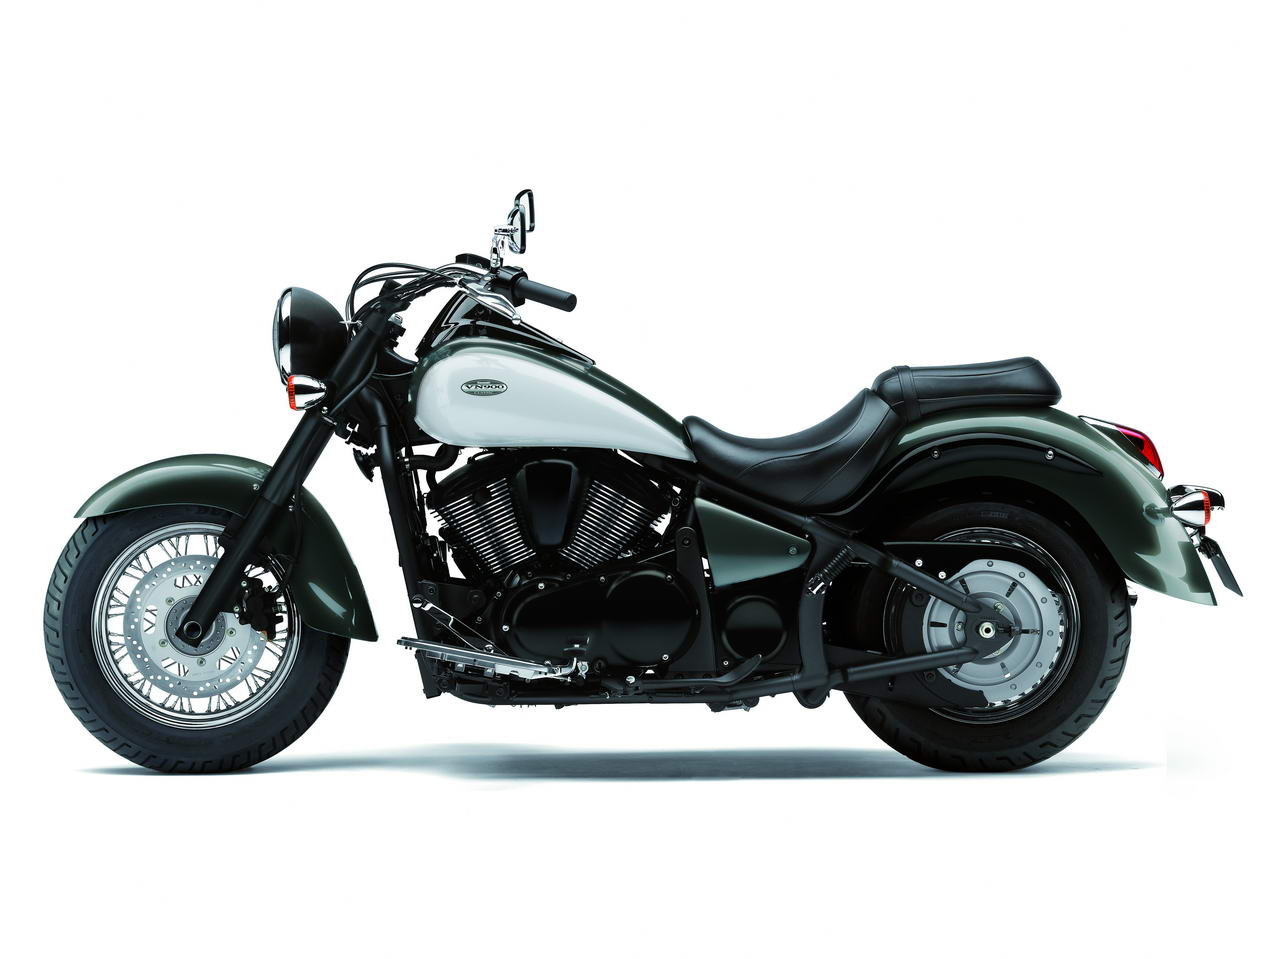 Listino Kawasaki W 800 Naked Mediand - image 15535_kawasaki-vn900-classic-special on https://moto.motori.net